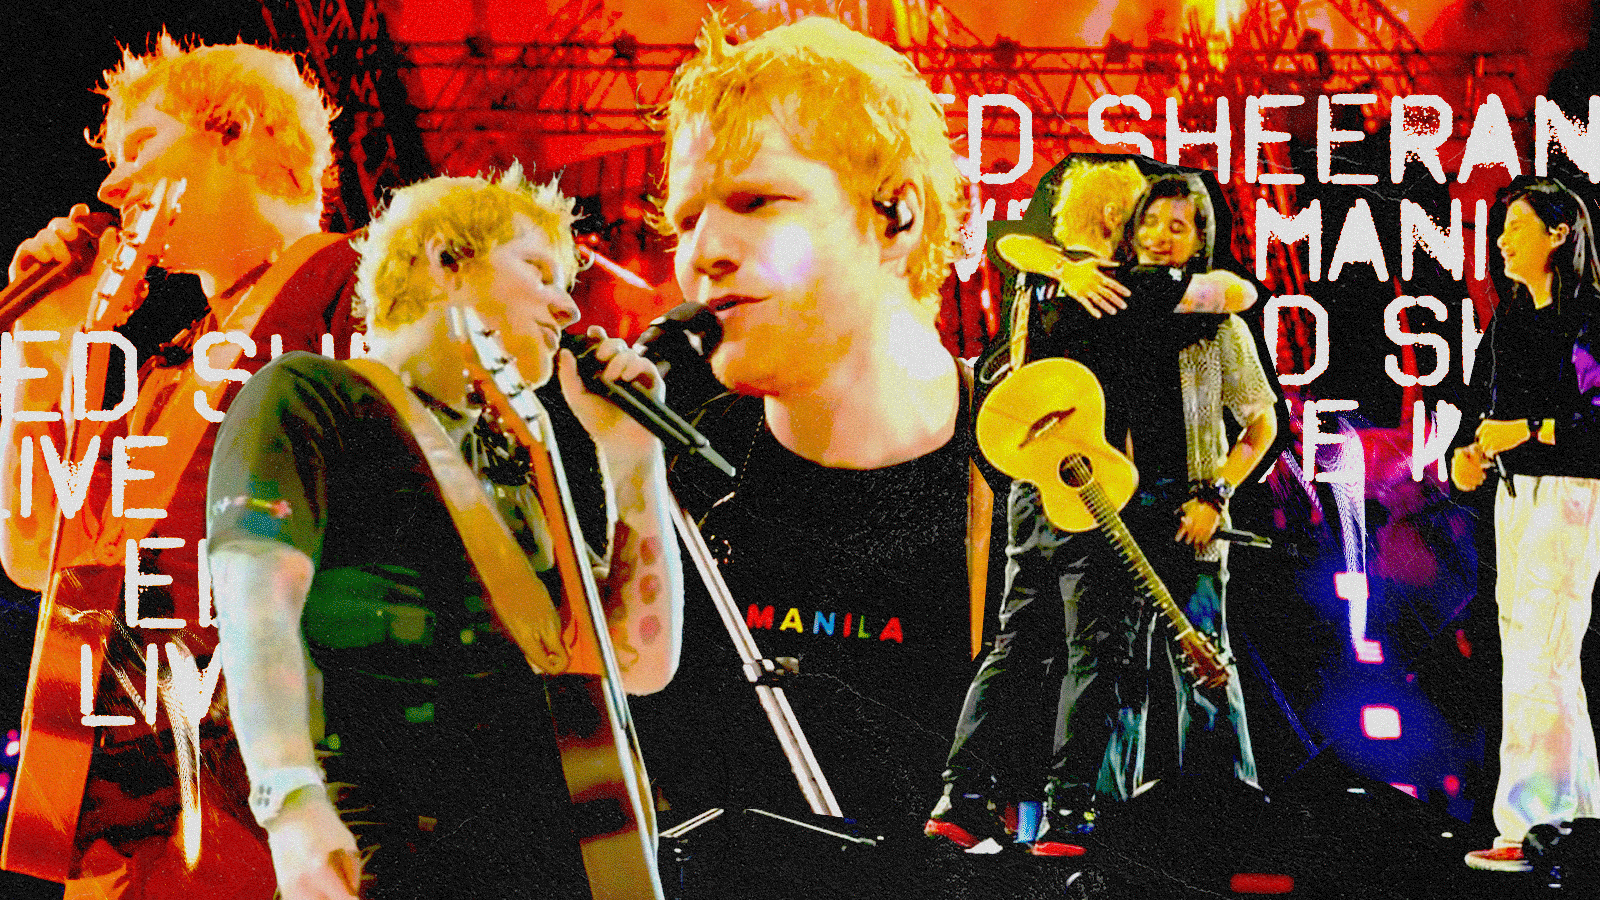 Ed Sheeran Returns Highlights from the +=÷x Tour’s Philippine Leg